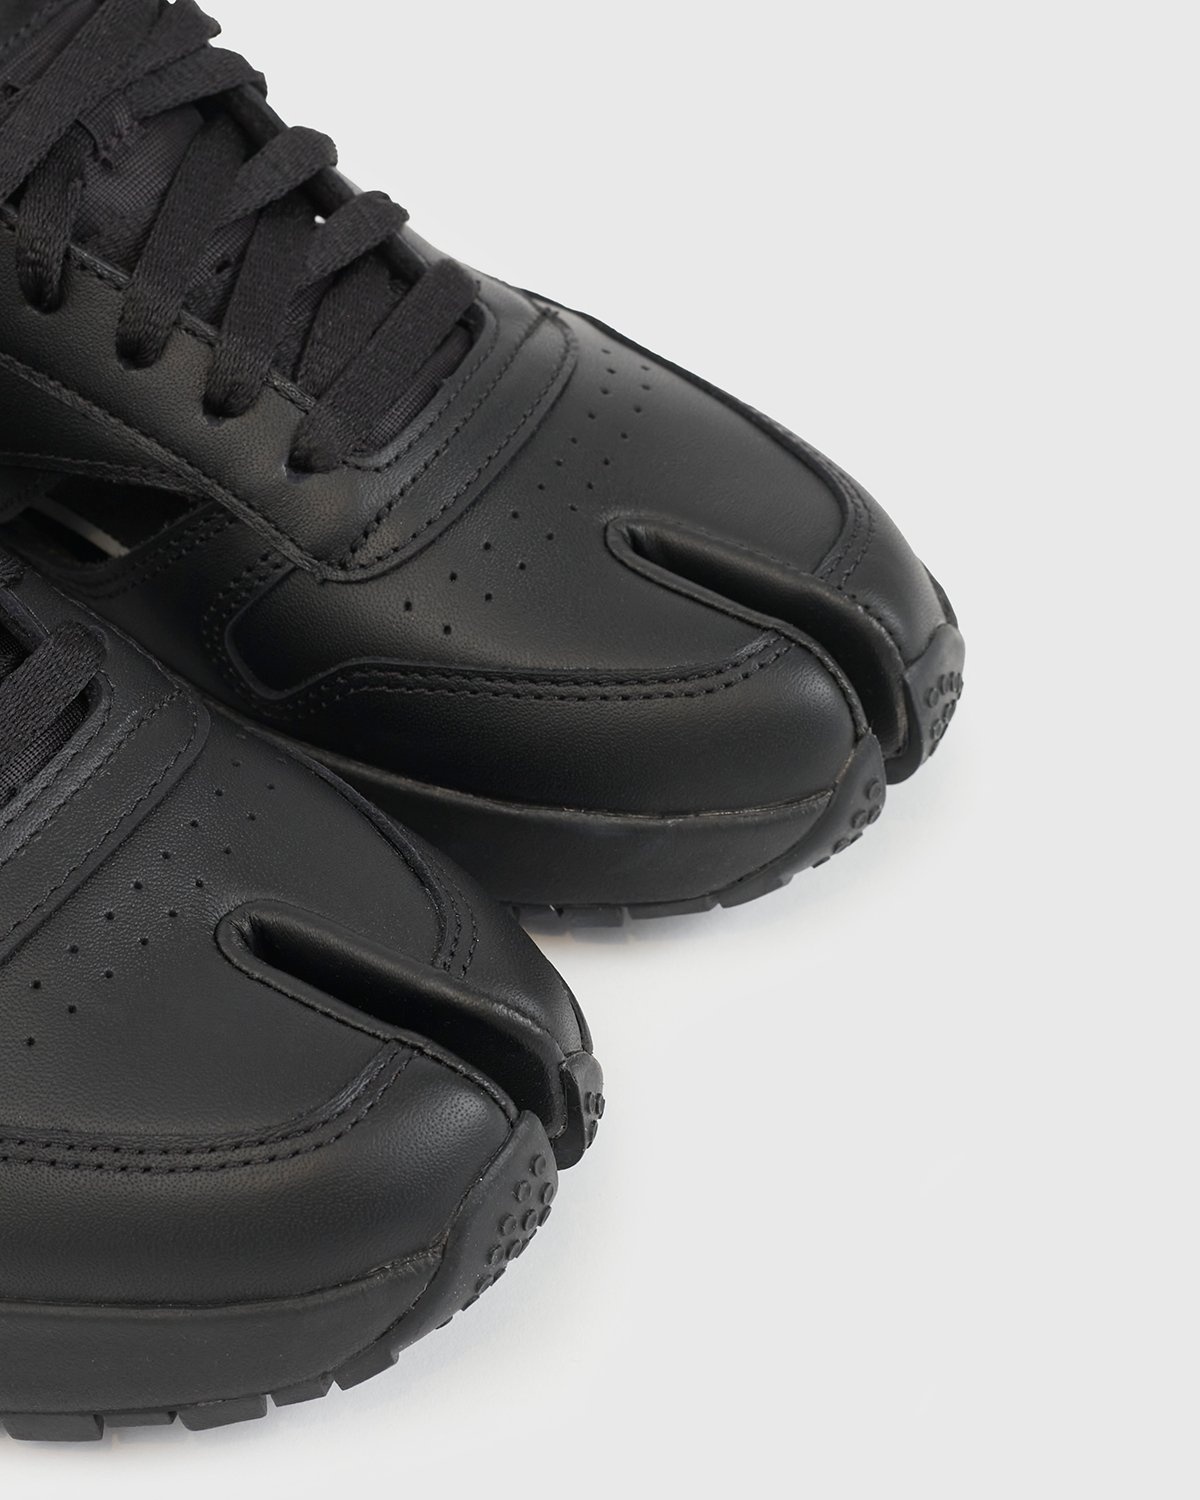 Maison Margiela x Reebok – Classic Leather Tabi Low Black - Sneakers - Black - Image 4